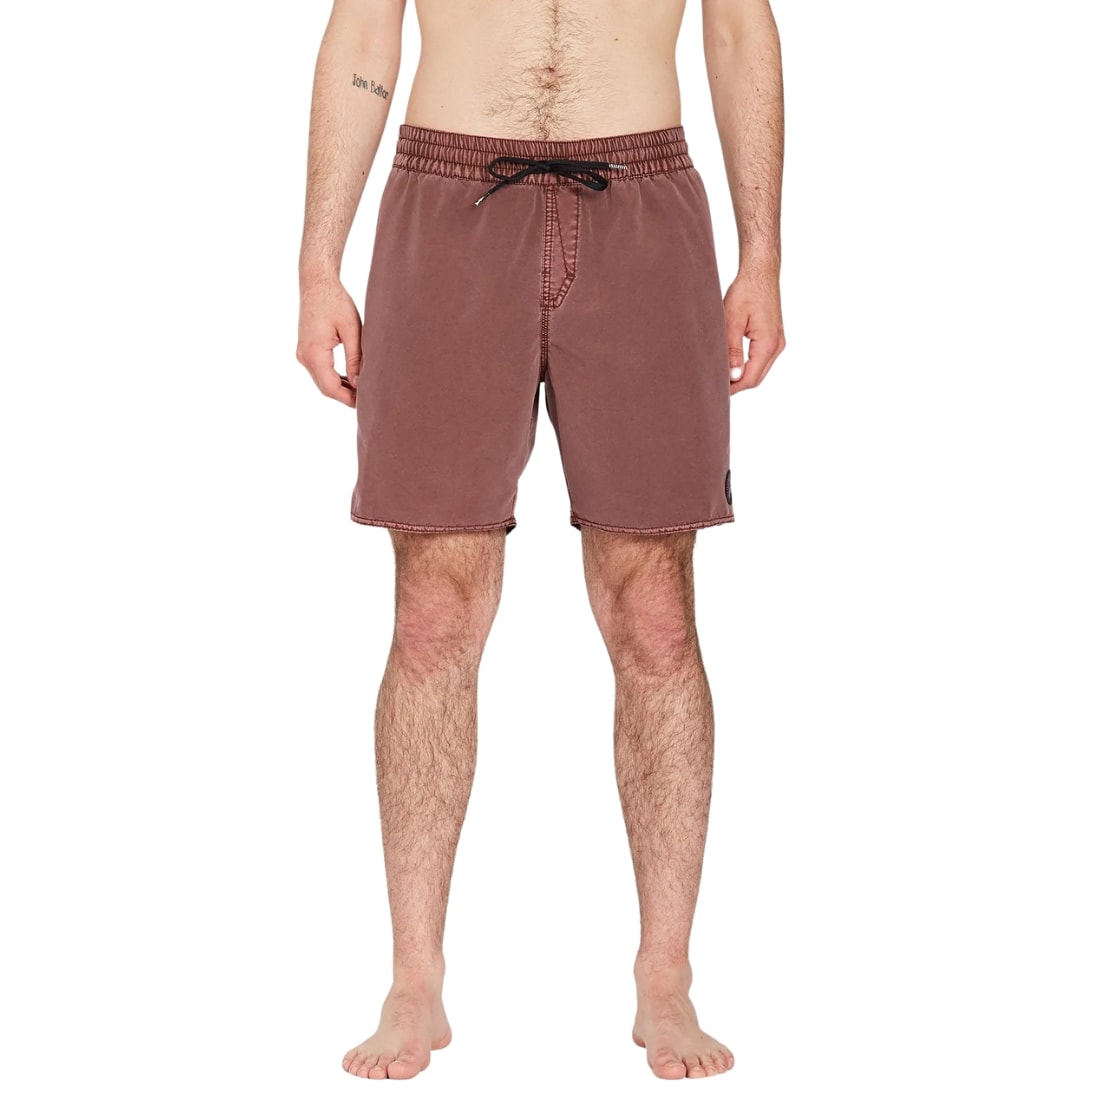 Volcom Center Trunk 17" Shorts - Bordeaux Brown - Mens Walk Shorts by Volcom